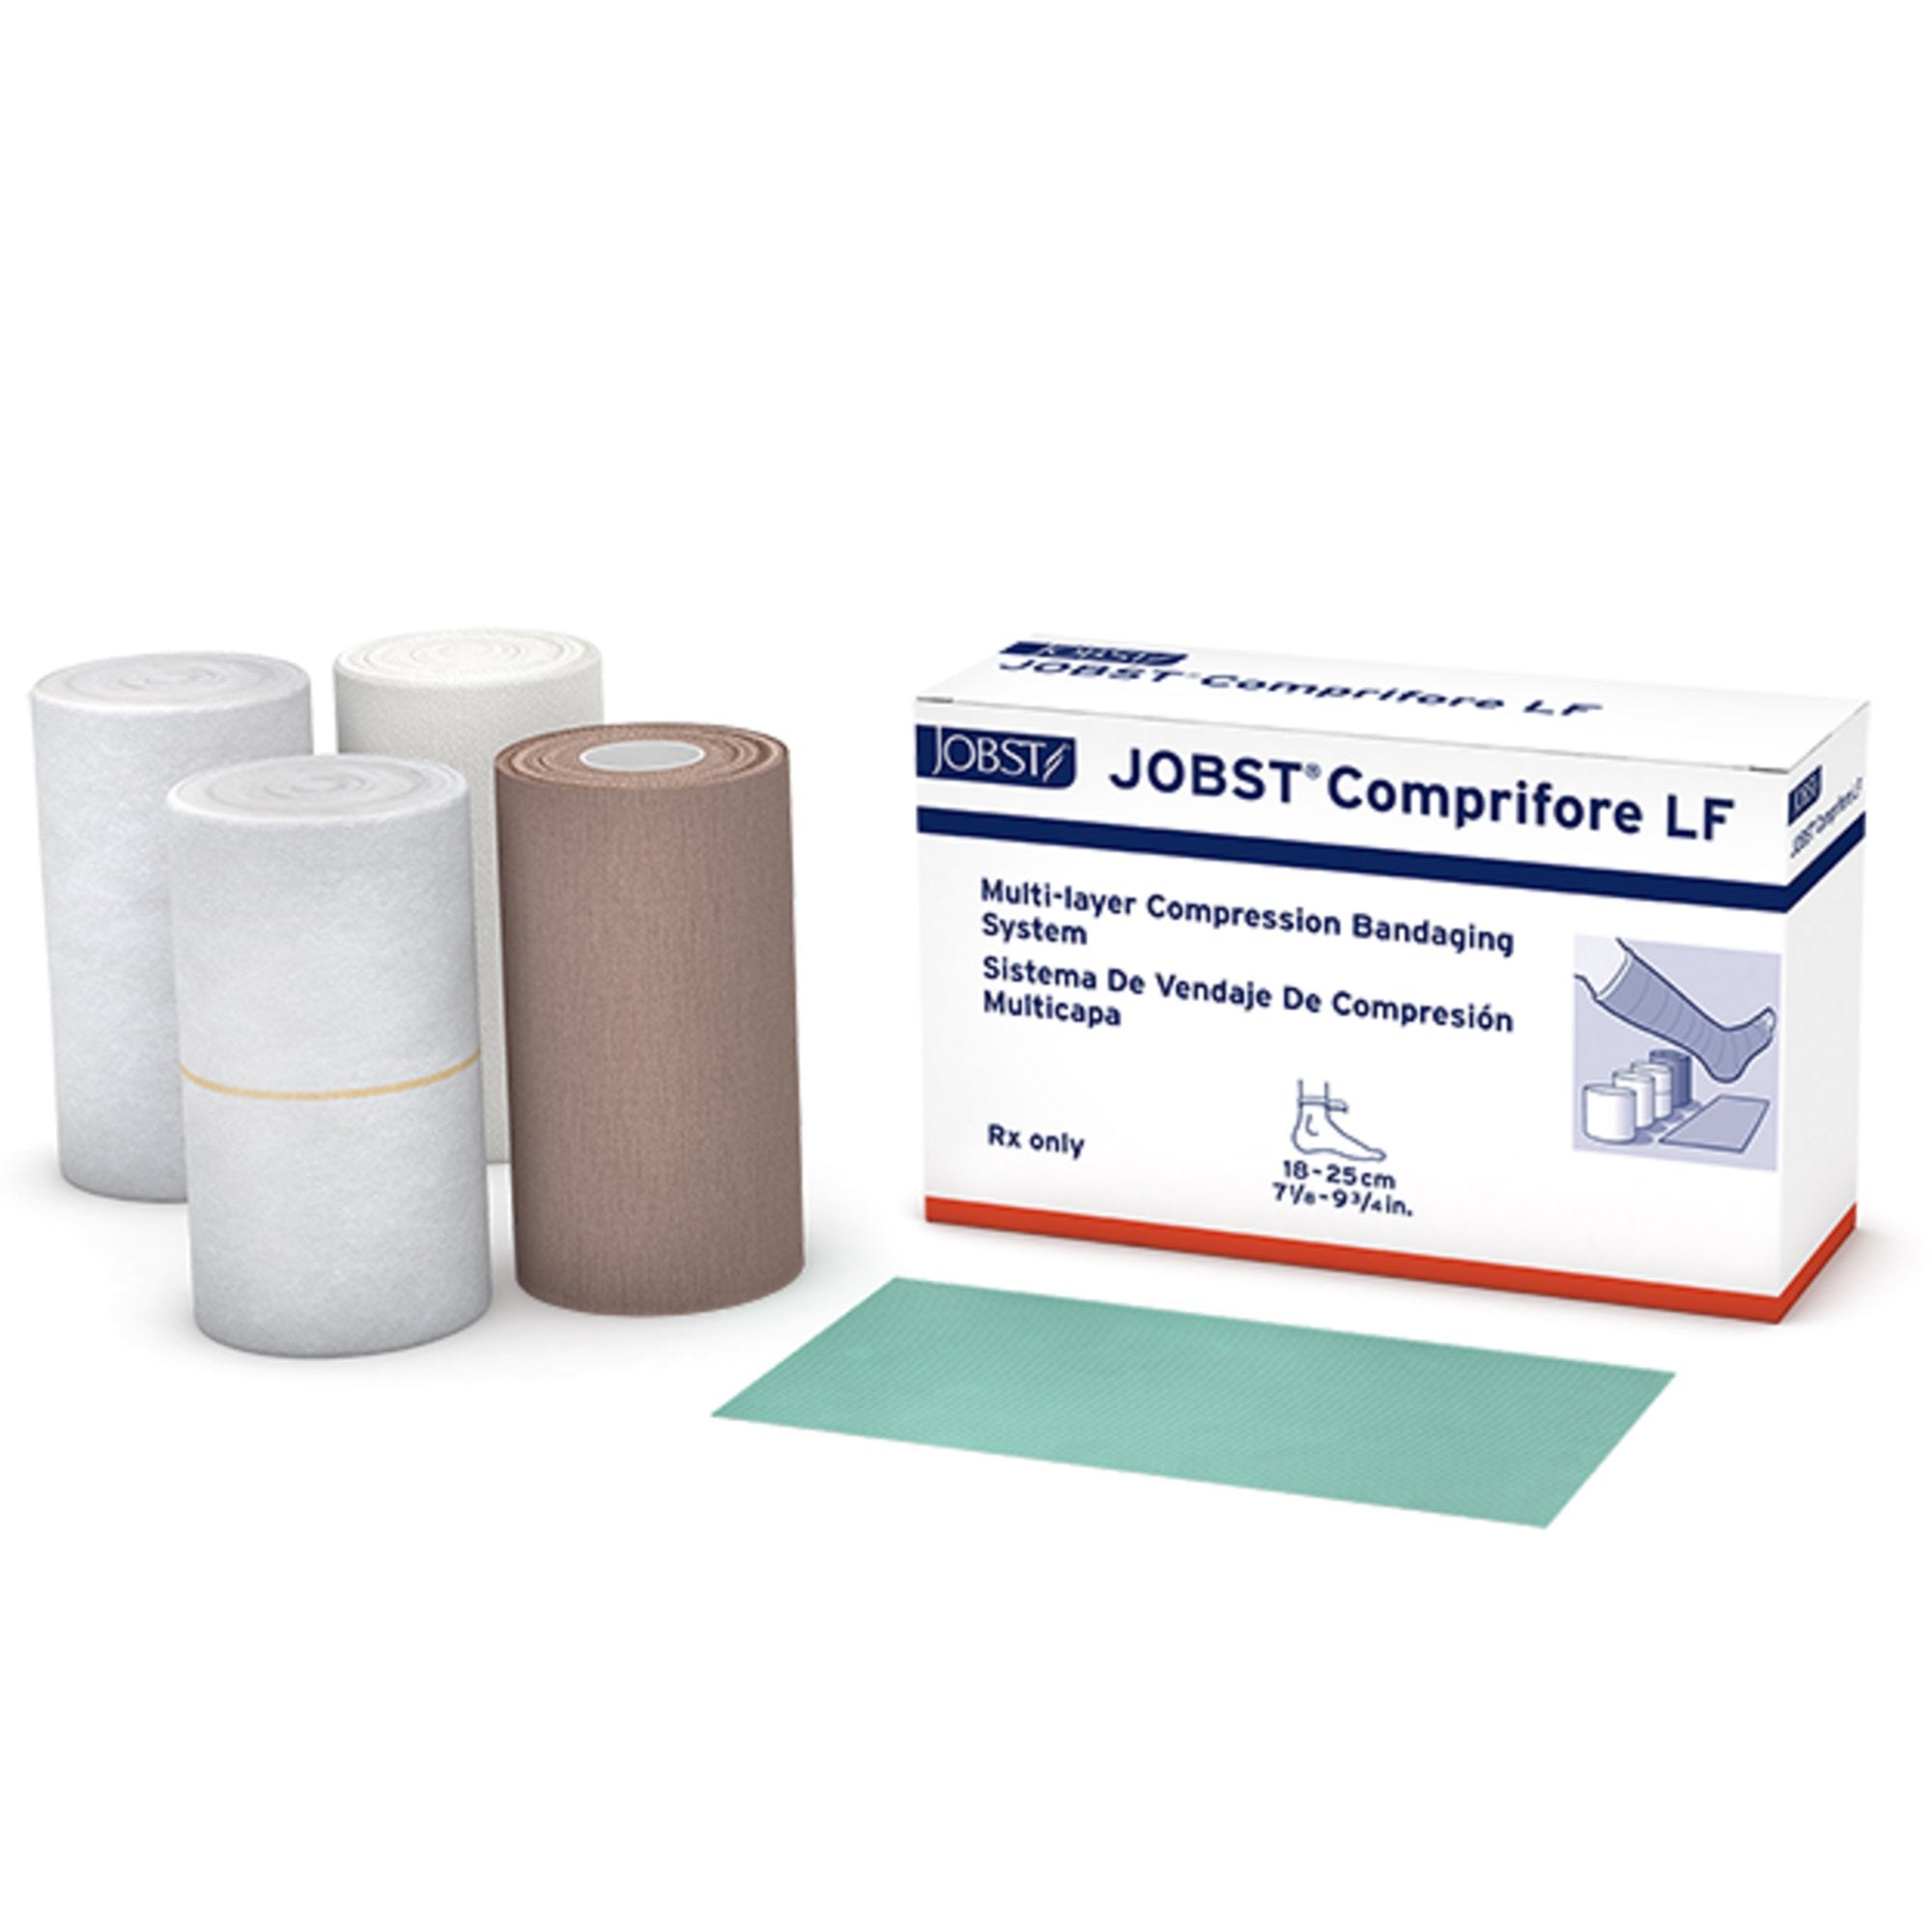 4 Layer Compression Bandage System JOBST Comprifore LF 7 to 10 Inch 40 mmHg No Closure Tan / White NonSterile